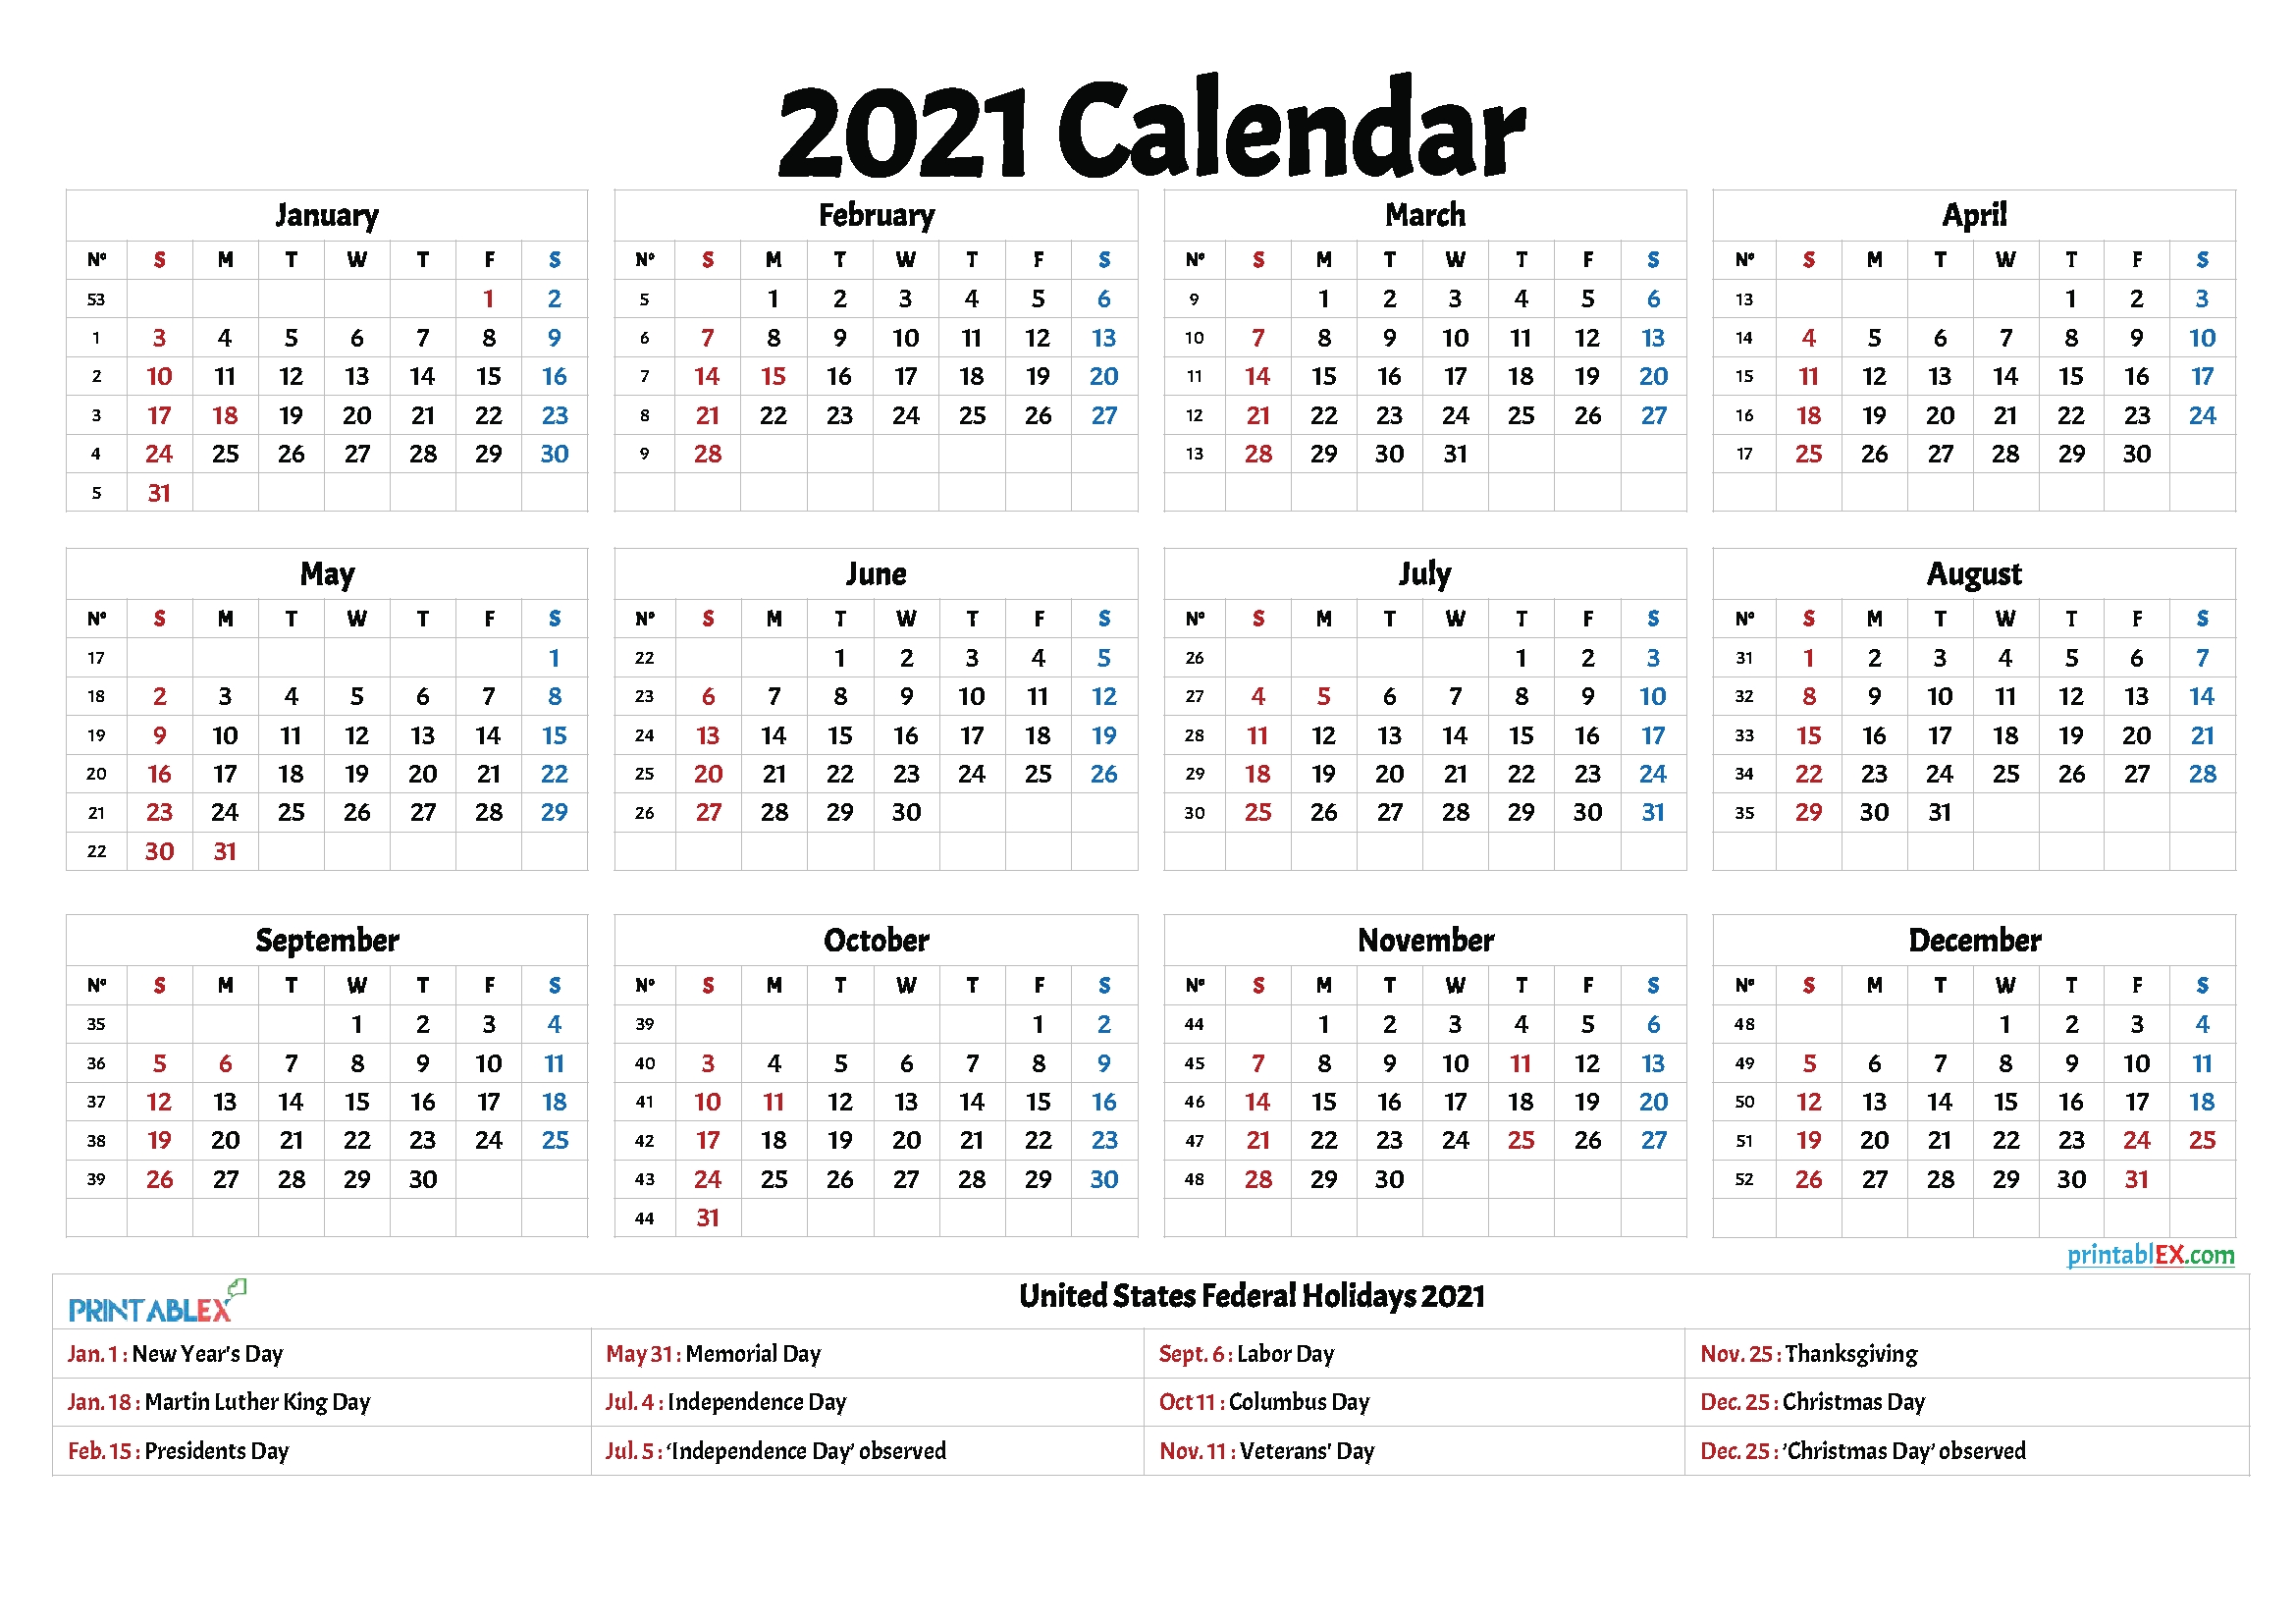 Get Free Printable 2021 Calendar With Holidays Us